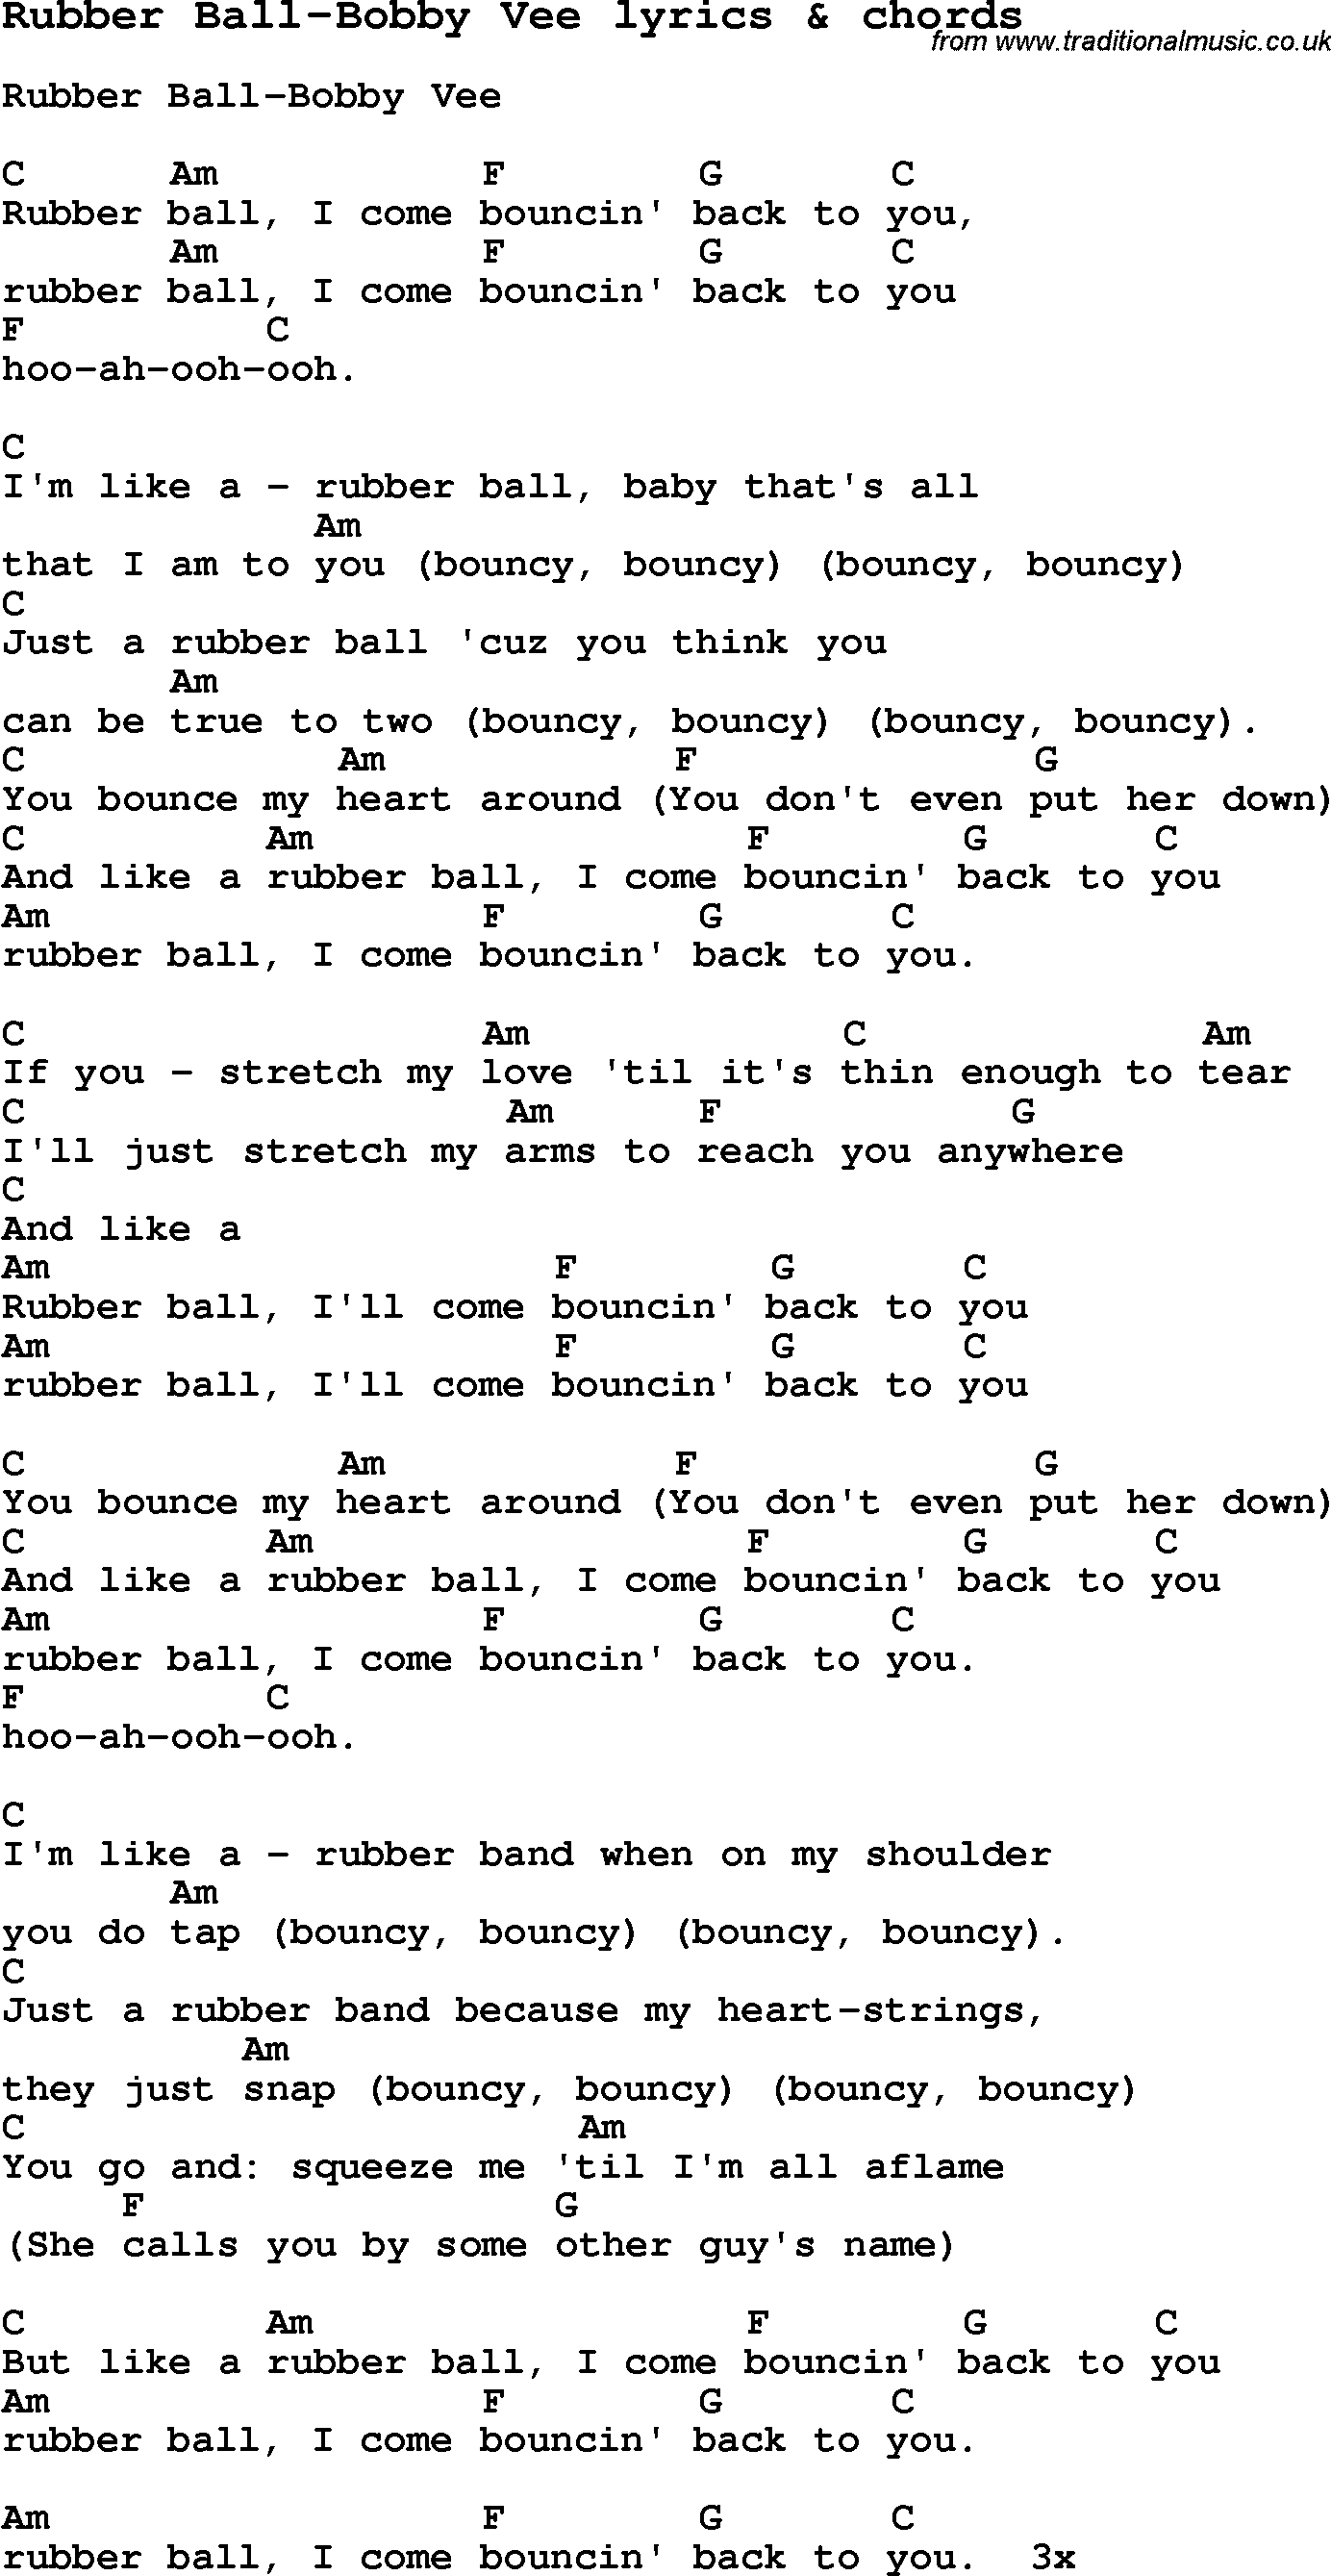 Love Song Lyrics for: Rubber Ball-Bobby Vee with chords for Ukulele, Guitar Banjo etc.